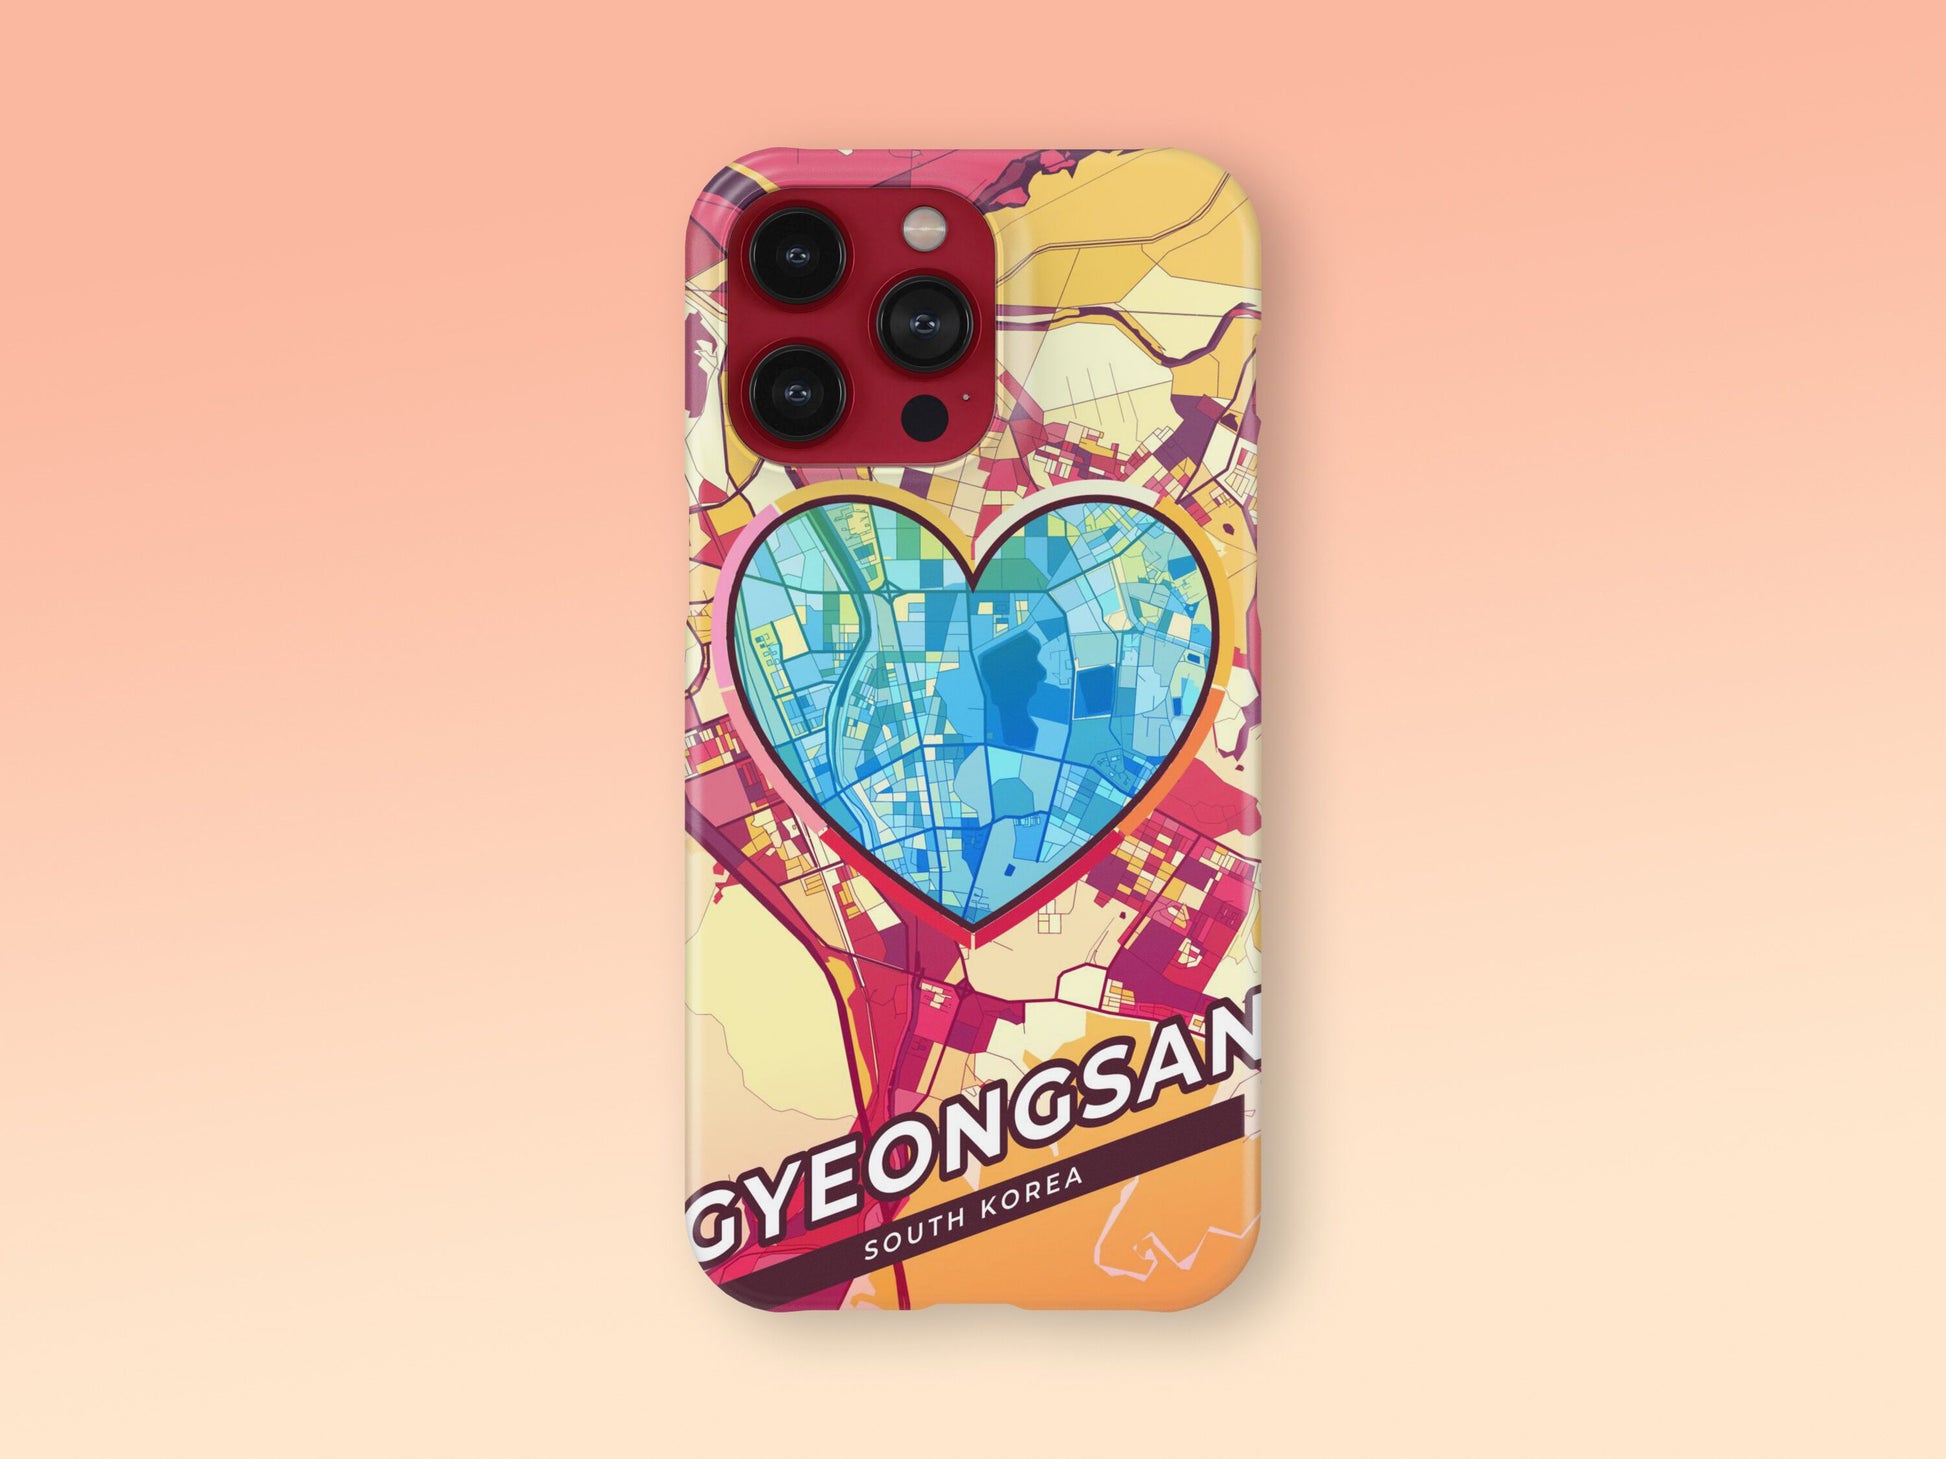 Gyeongsan South Korea slim phone case with colorful icon. Birthday, wedding or housewarming gift. Couple match cases. 2